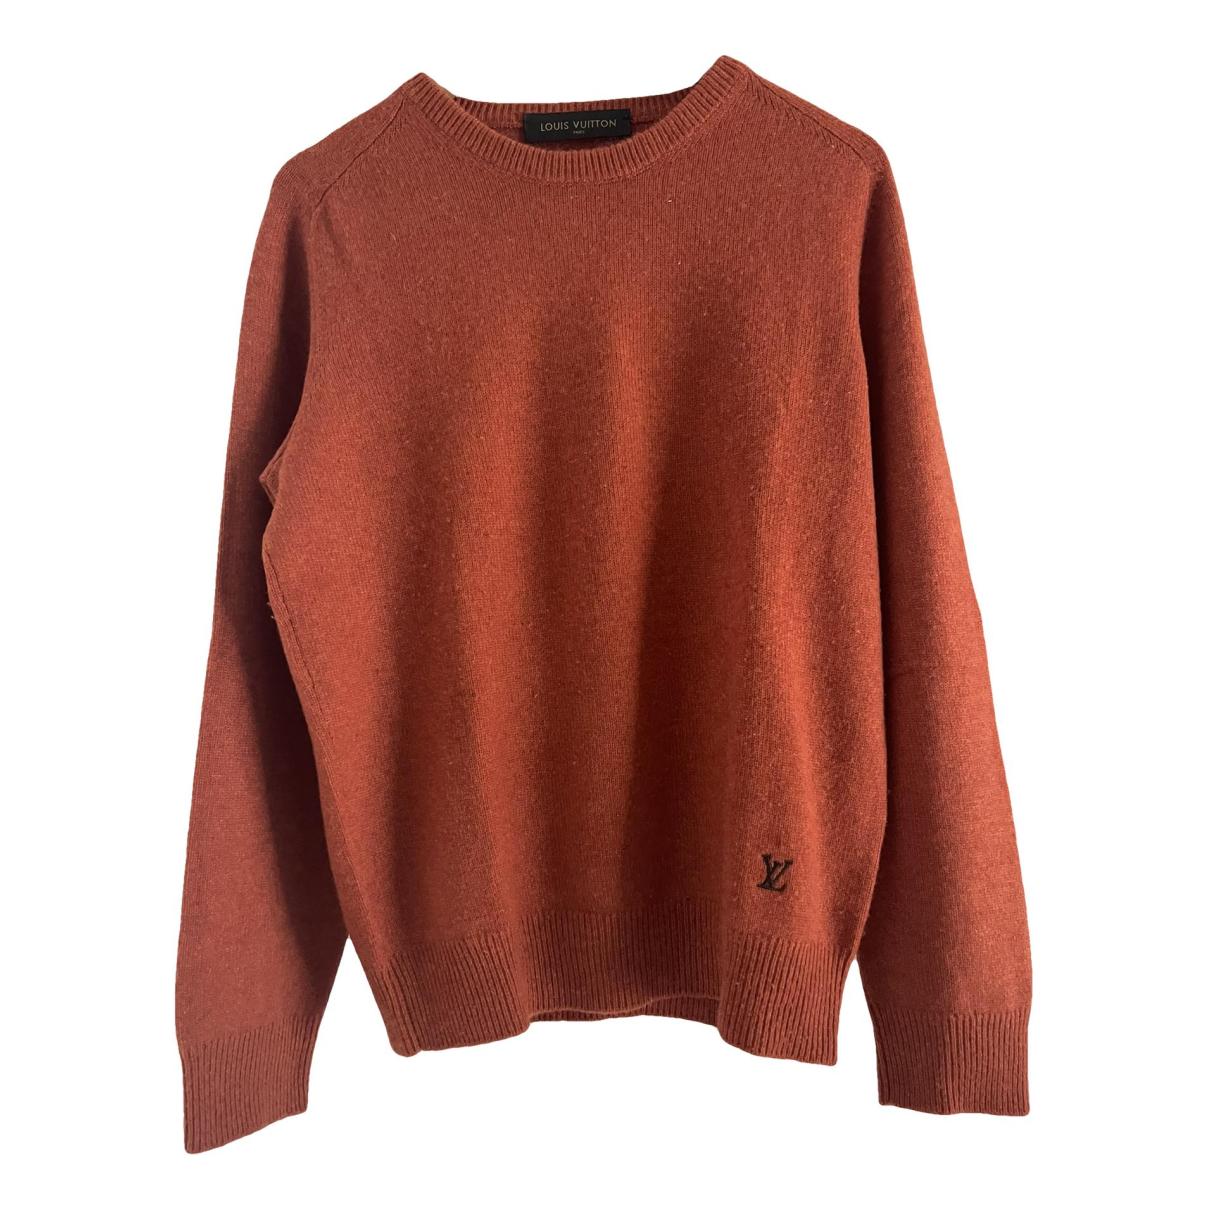 lv orange sweater